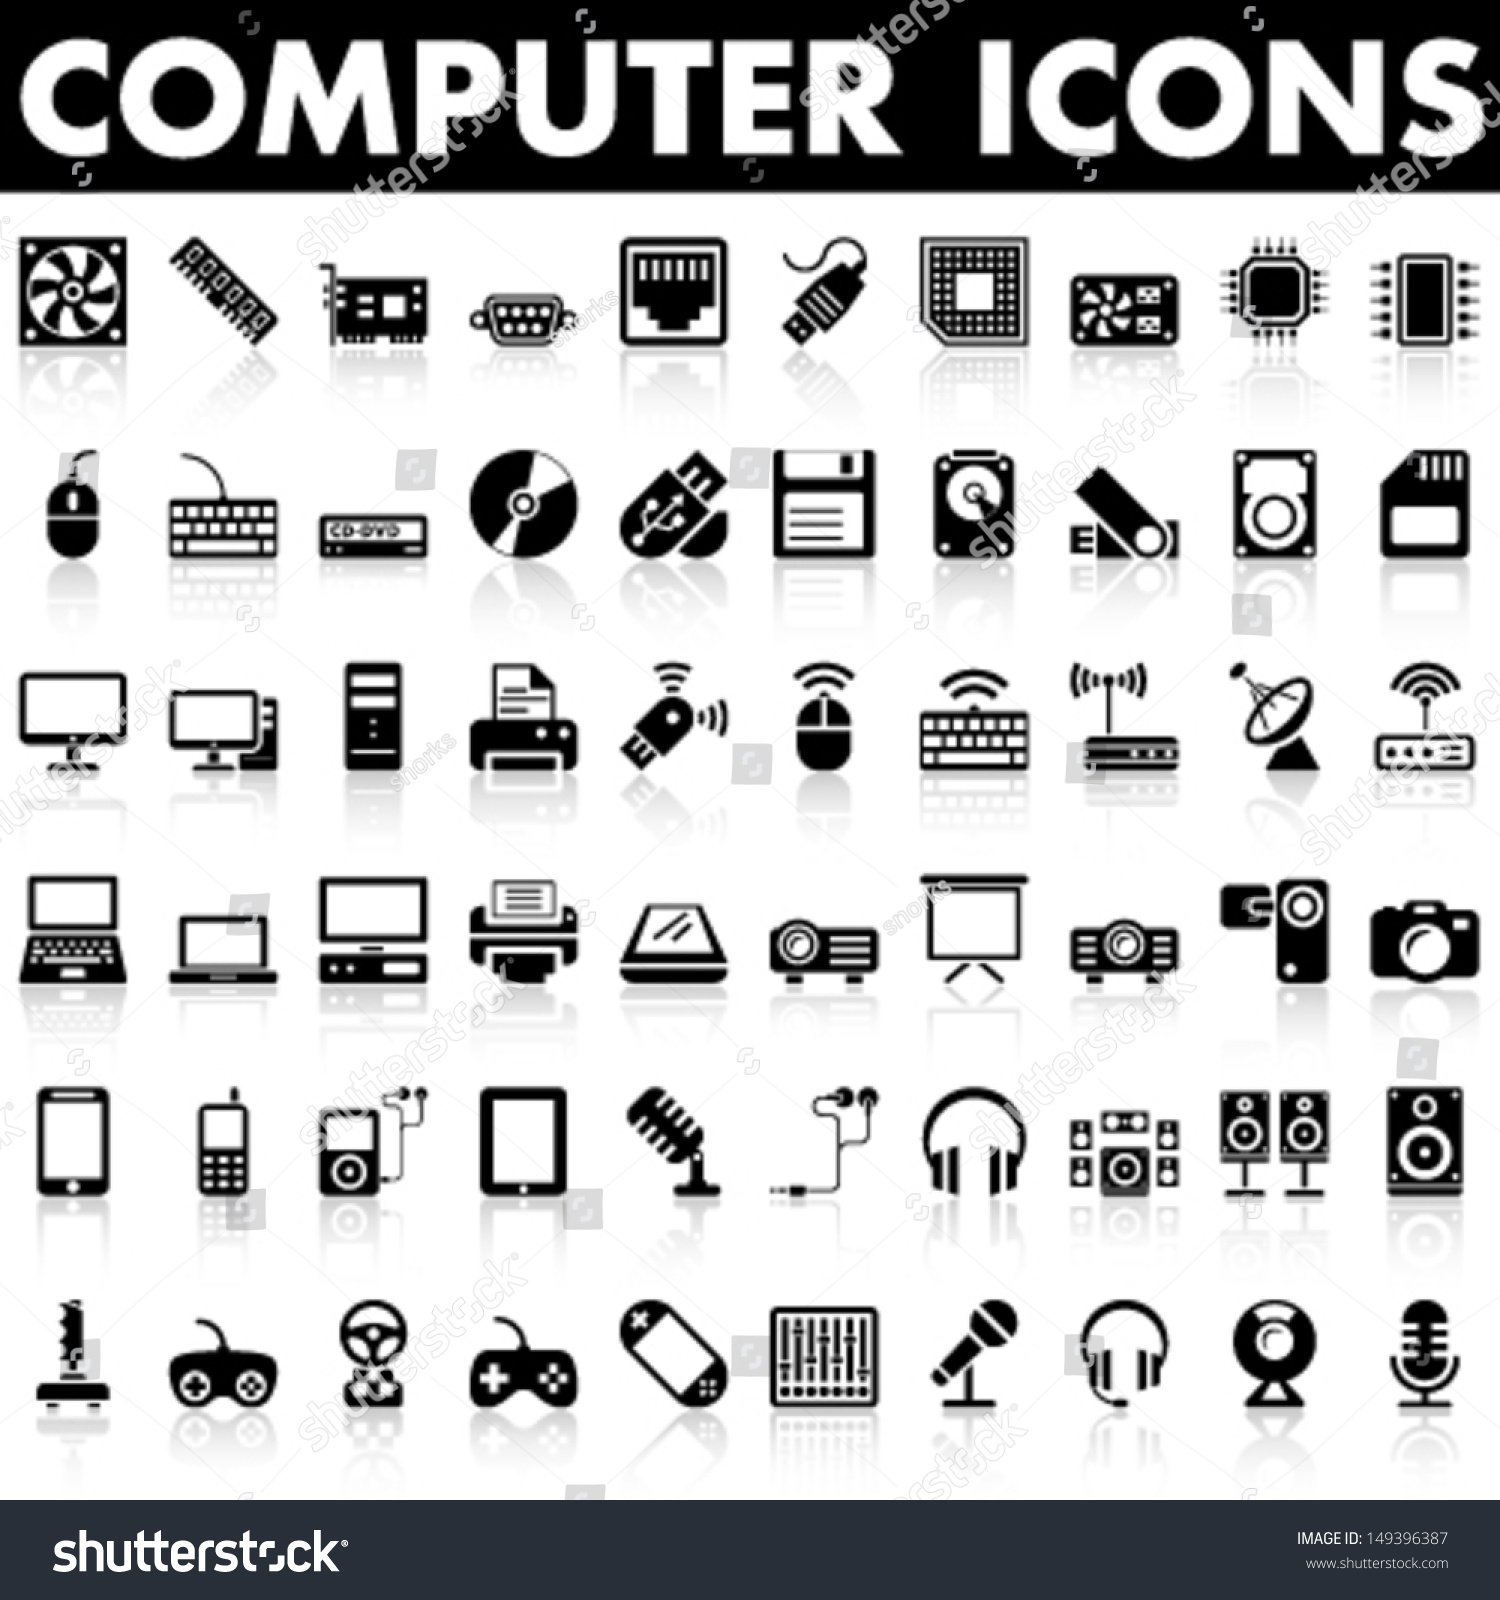 Computer Icons, Hardware #149396387